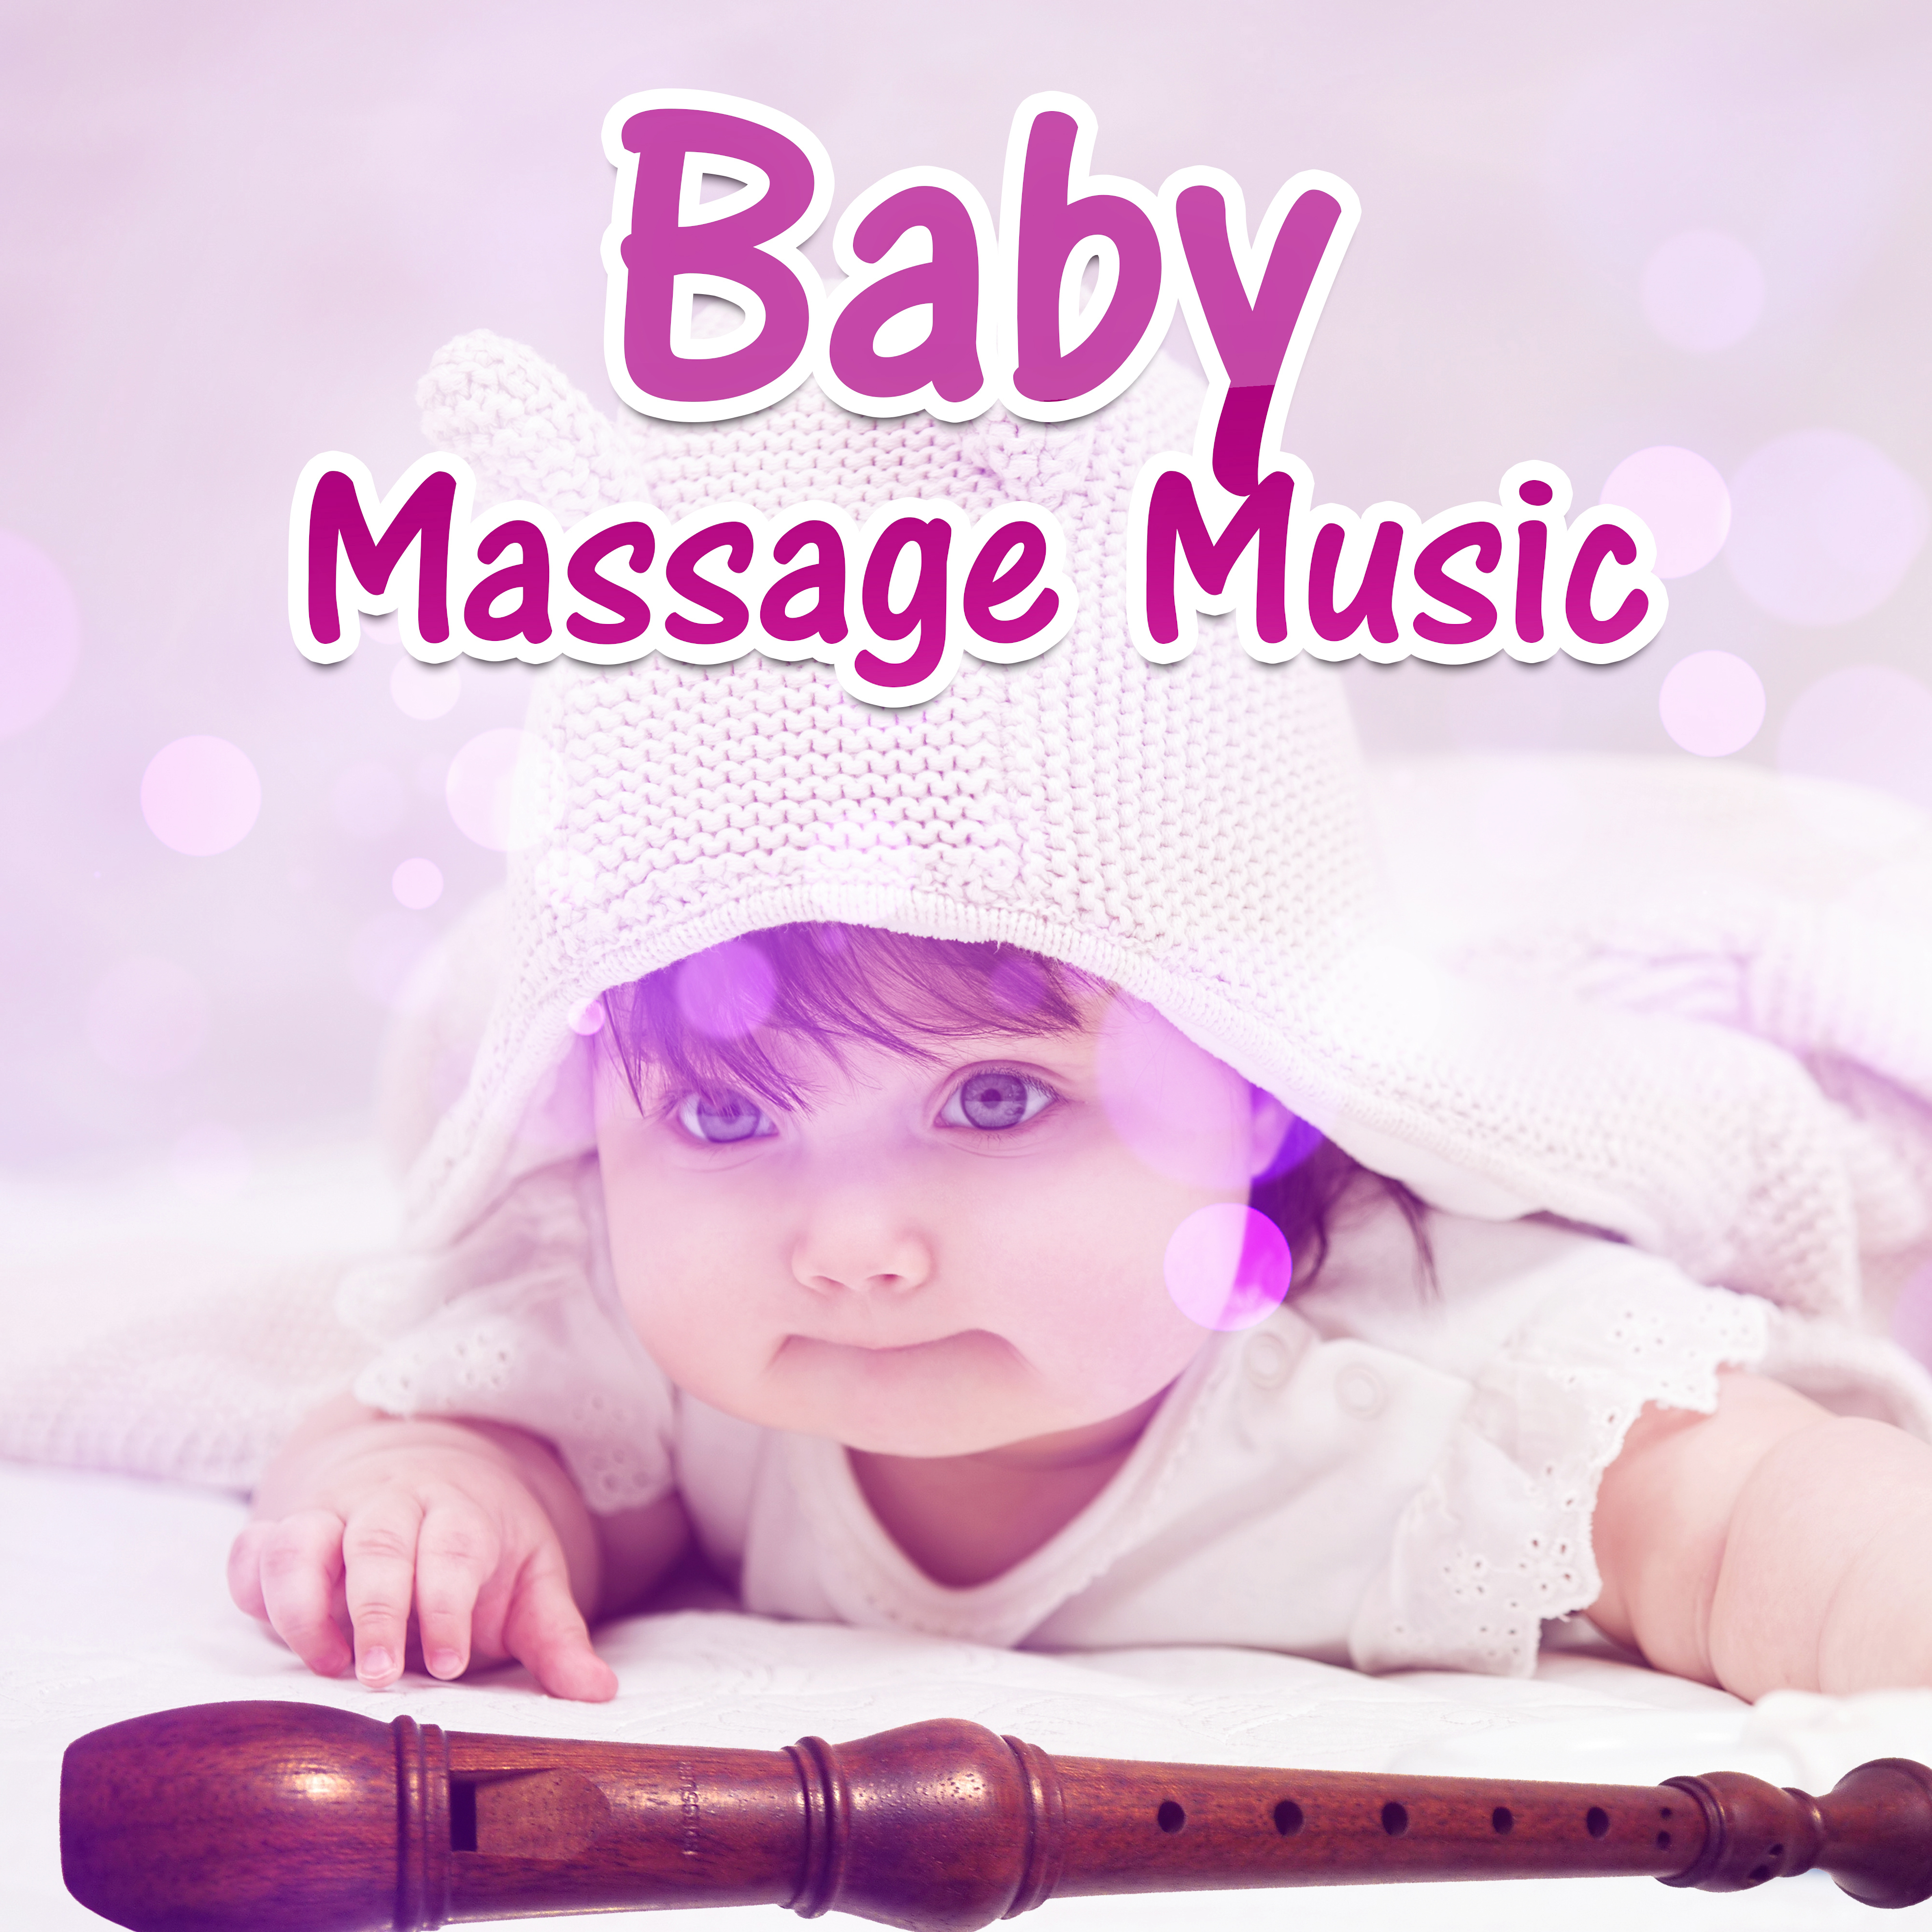 Baby Massage Music  Nature Music for Relaxation While Baby Massage, Baby Calmness, Sleep My Baby, Sleep Aid, Relaxing Night